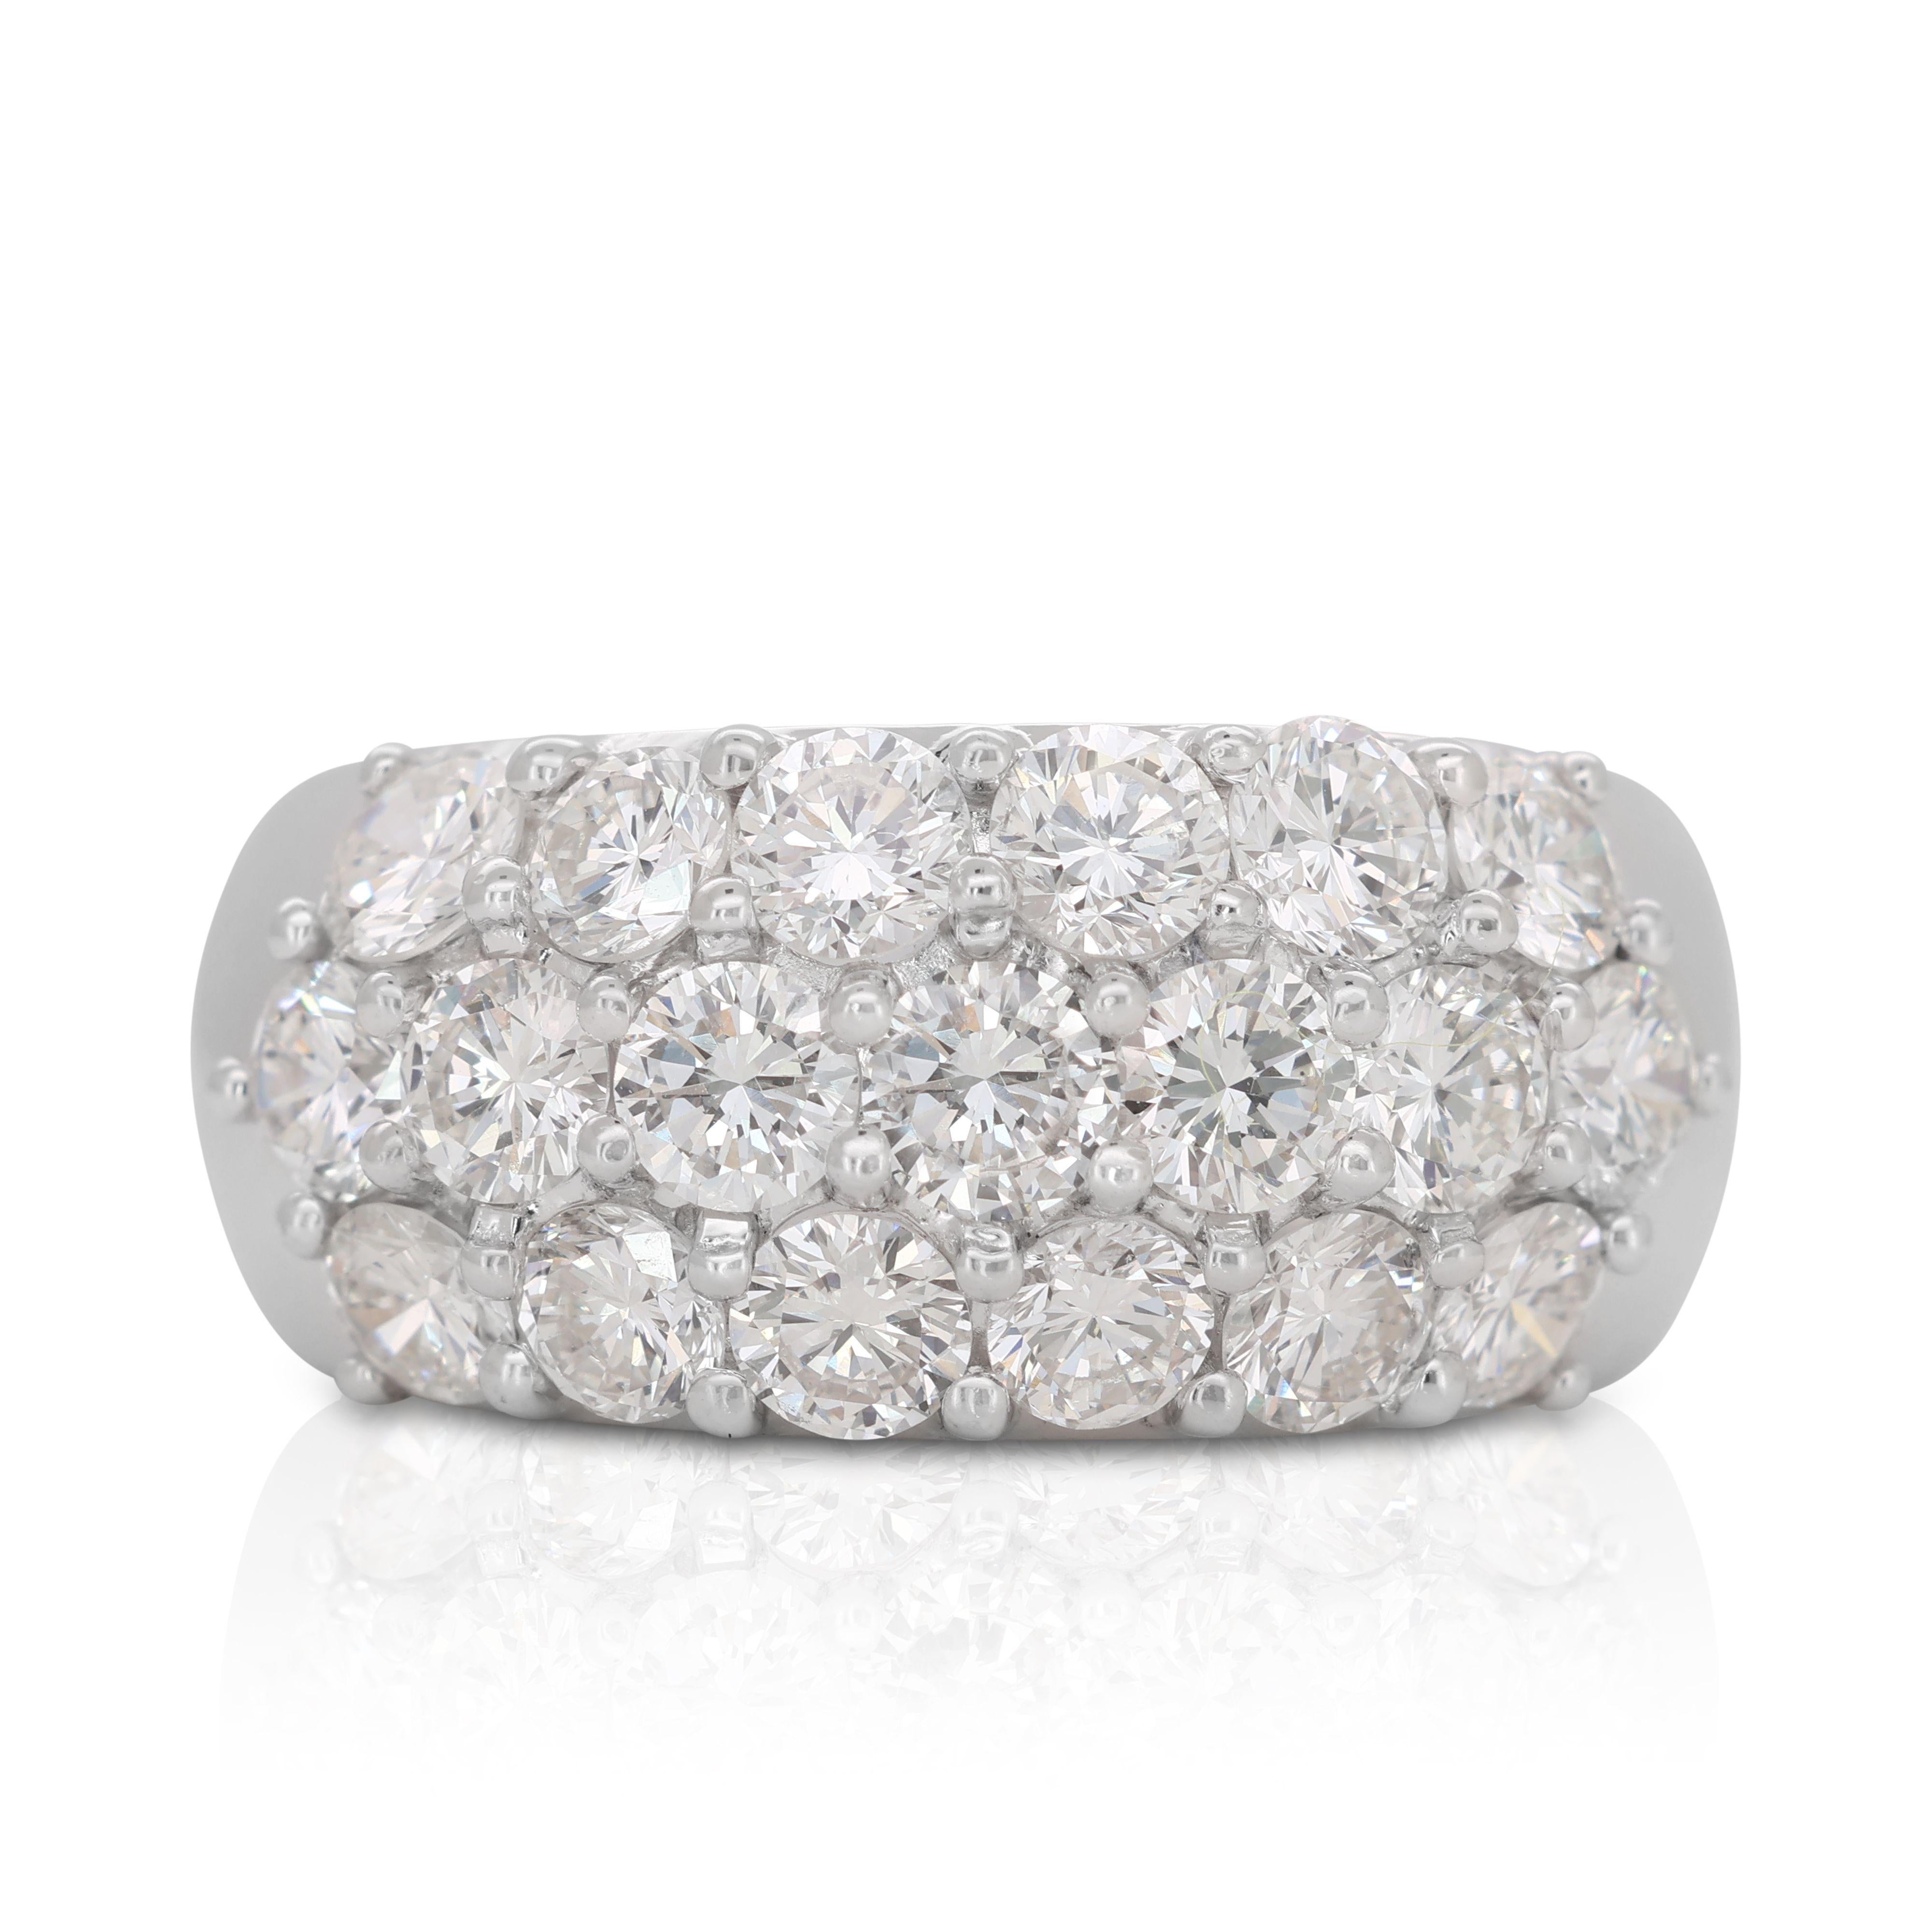 Ravishing 18k White Gold Dome Ring with 2.2 Ct Natural Diamonds IGI Certificate